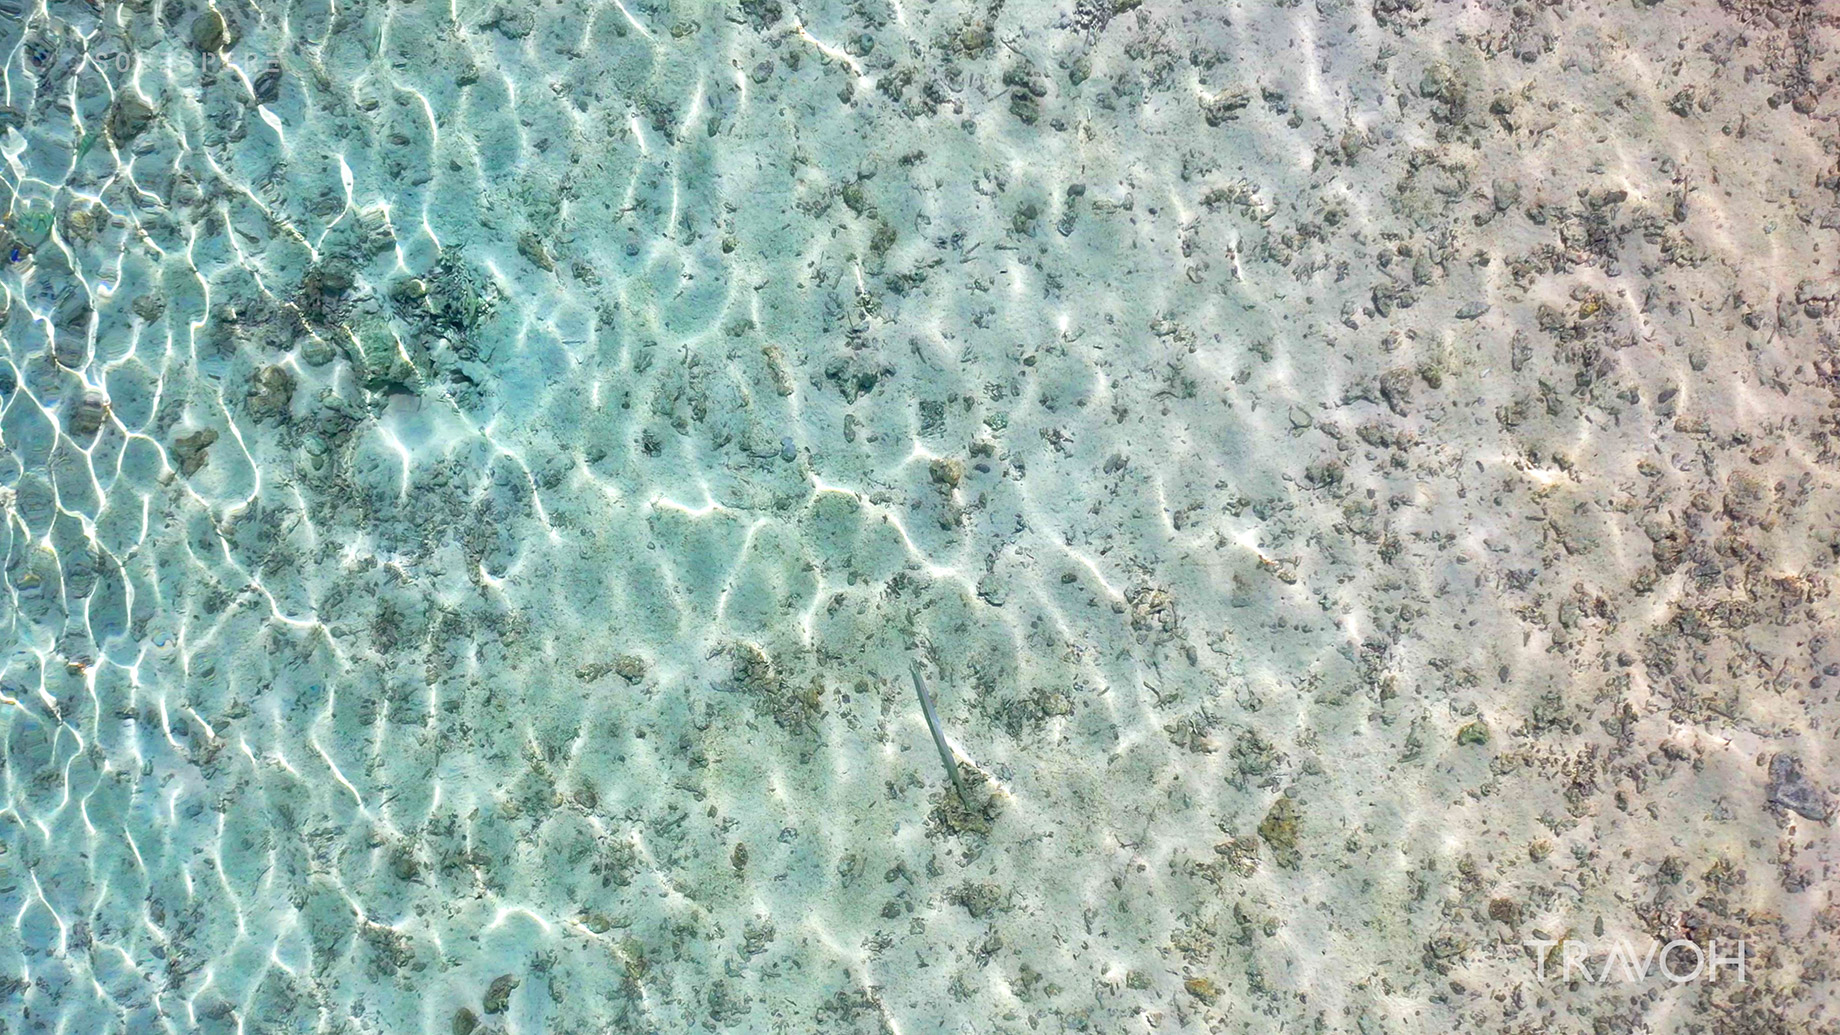 Seafloor Reflections - Tropical Seabed - Ocean Waves - Bora Bora, French Polynesia - 4K Travel Video